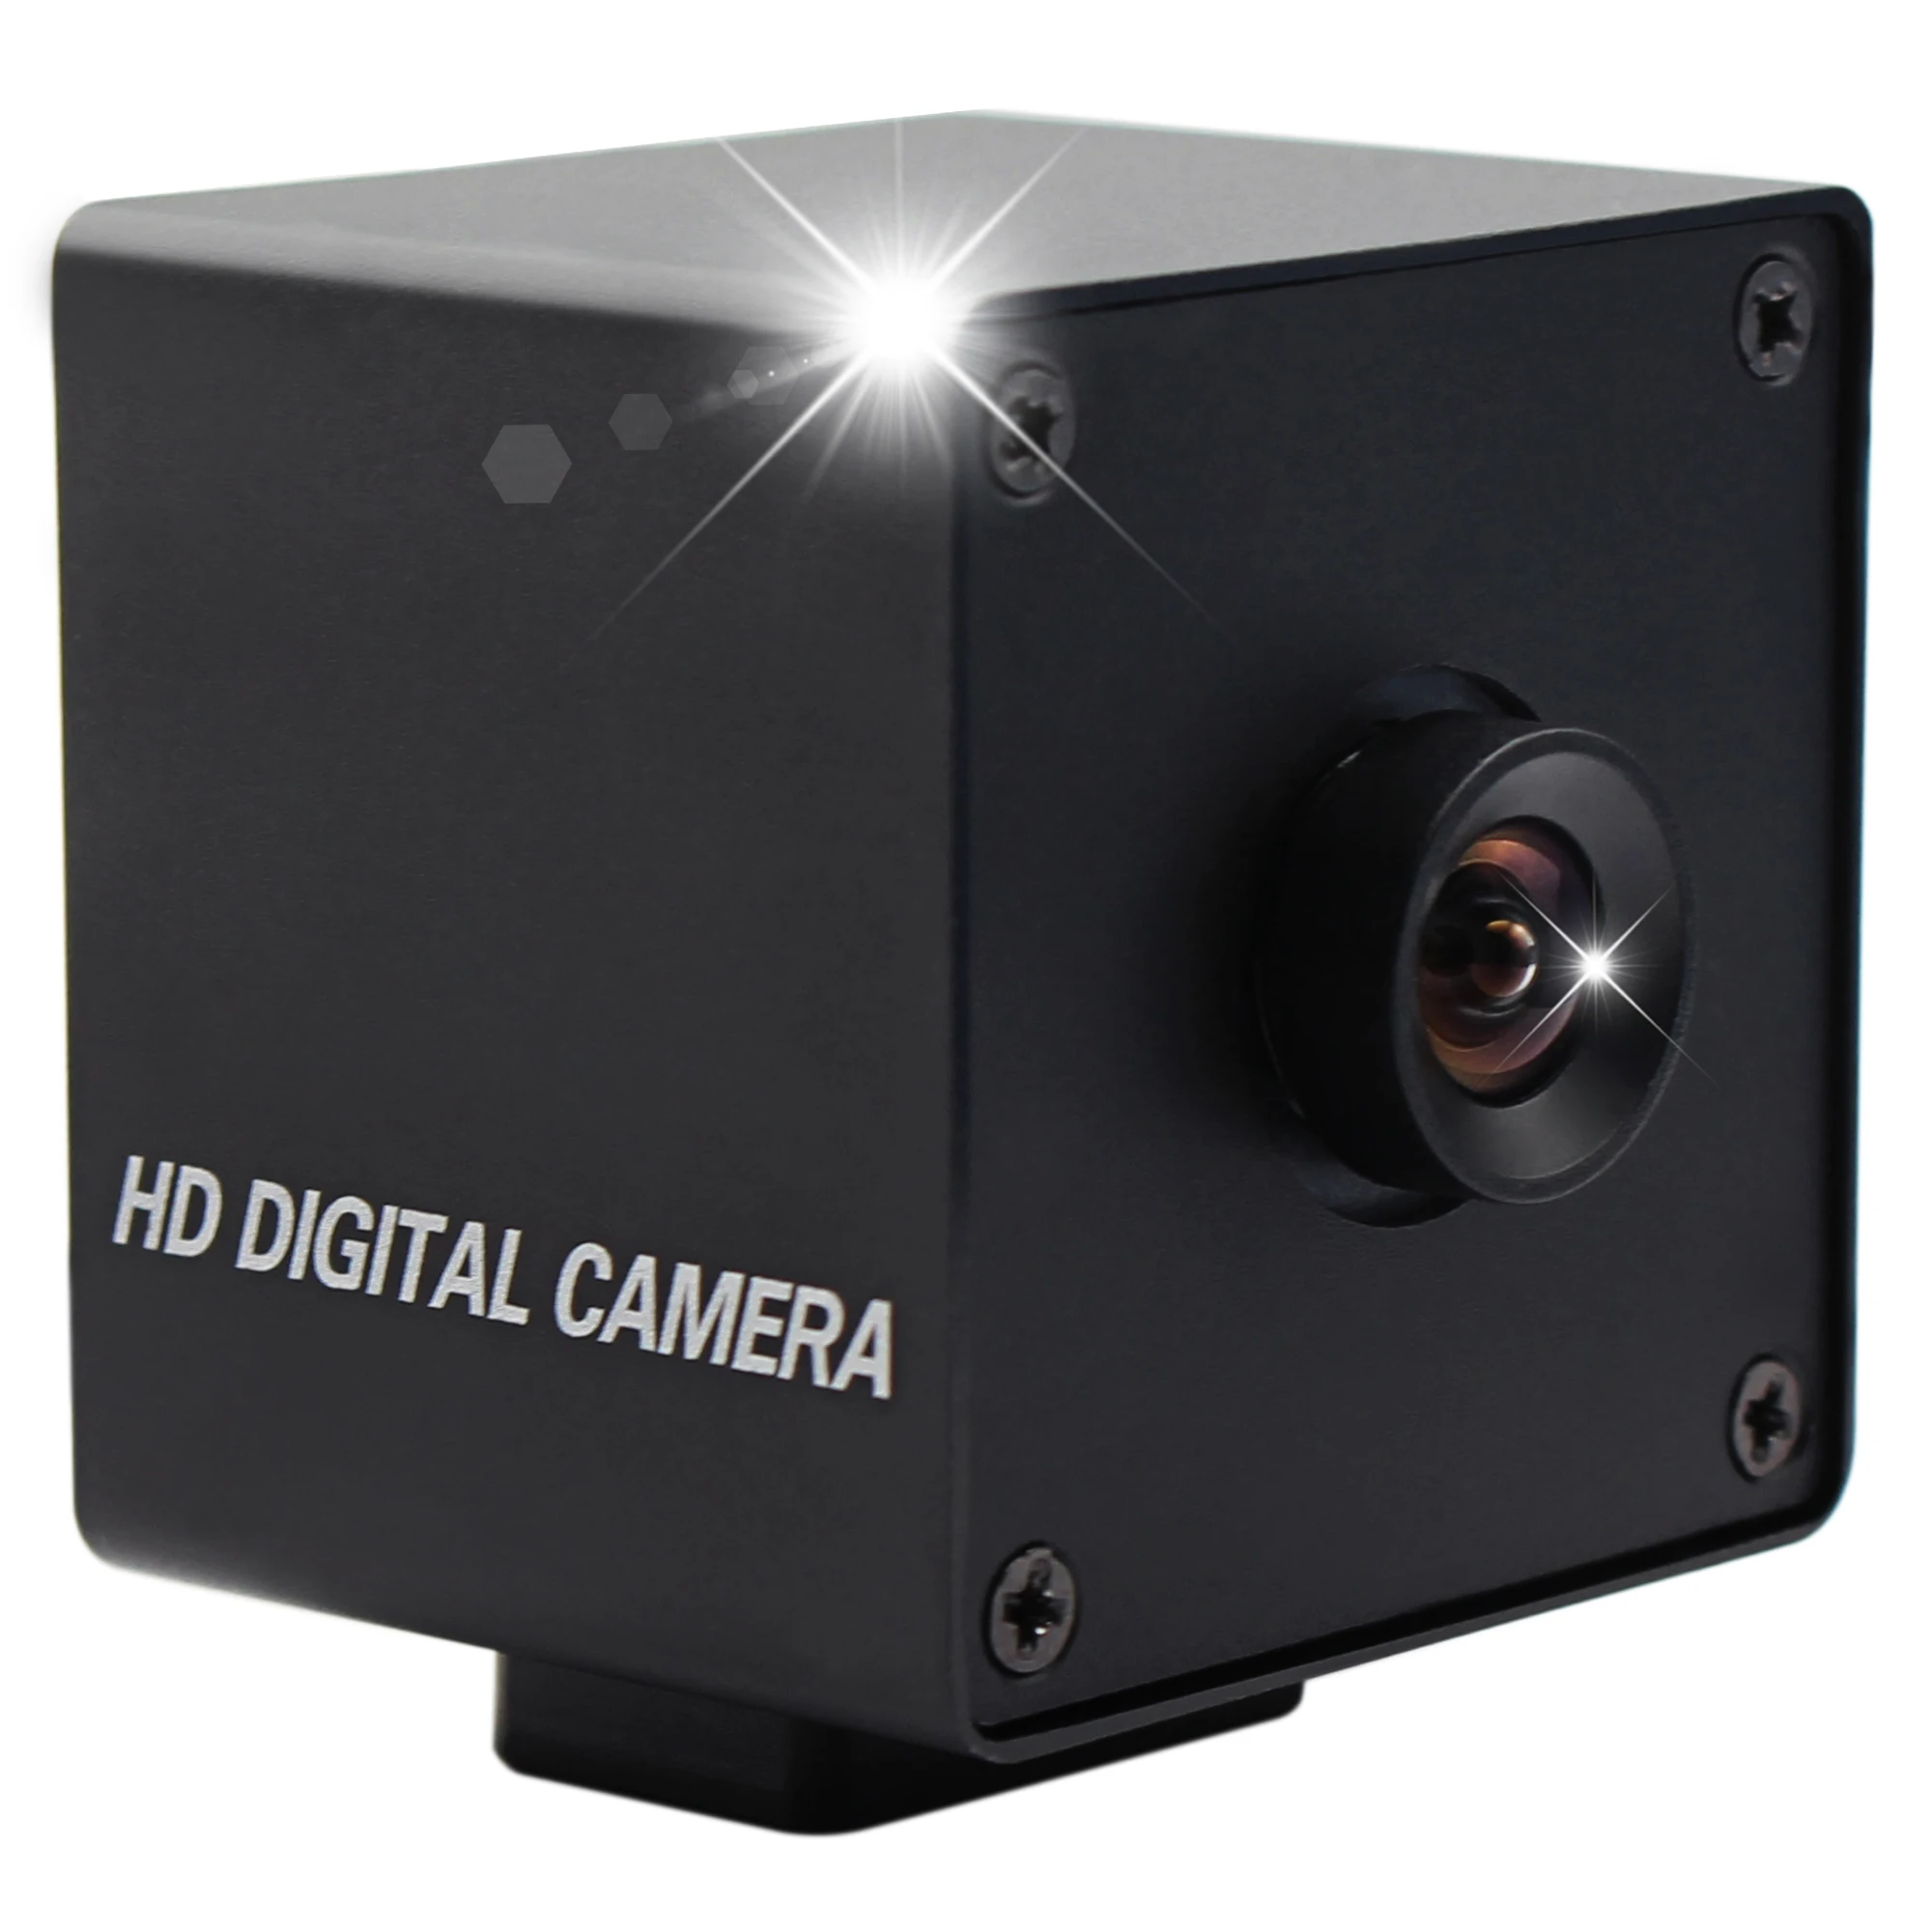 

4K USB Camera High Frame Rate 3840x2160 Mjpeg 30fps Webcam USB Web Camera Free Driver With IMX317 CMOS Sensor for PC Laptop